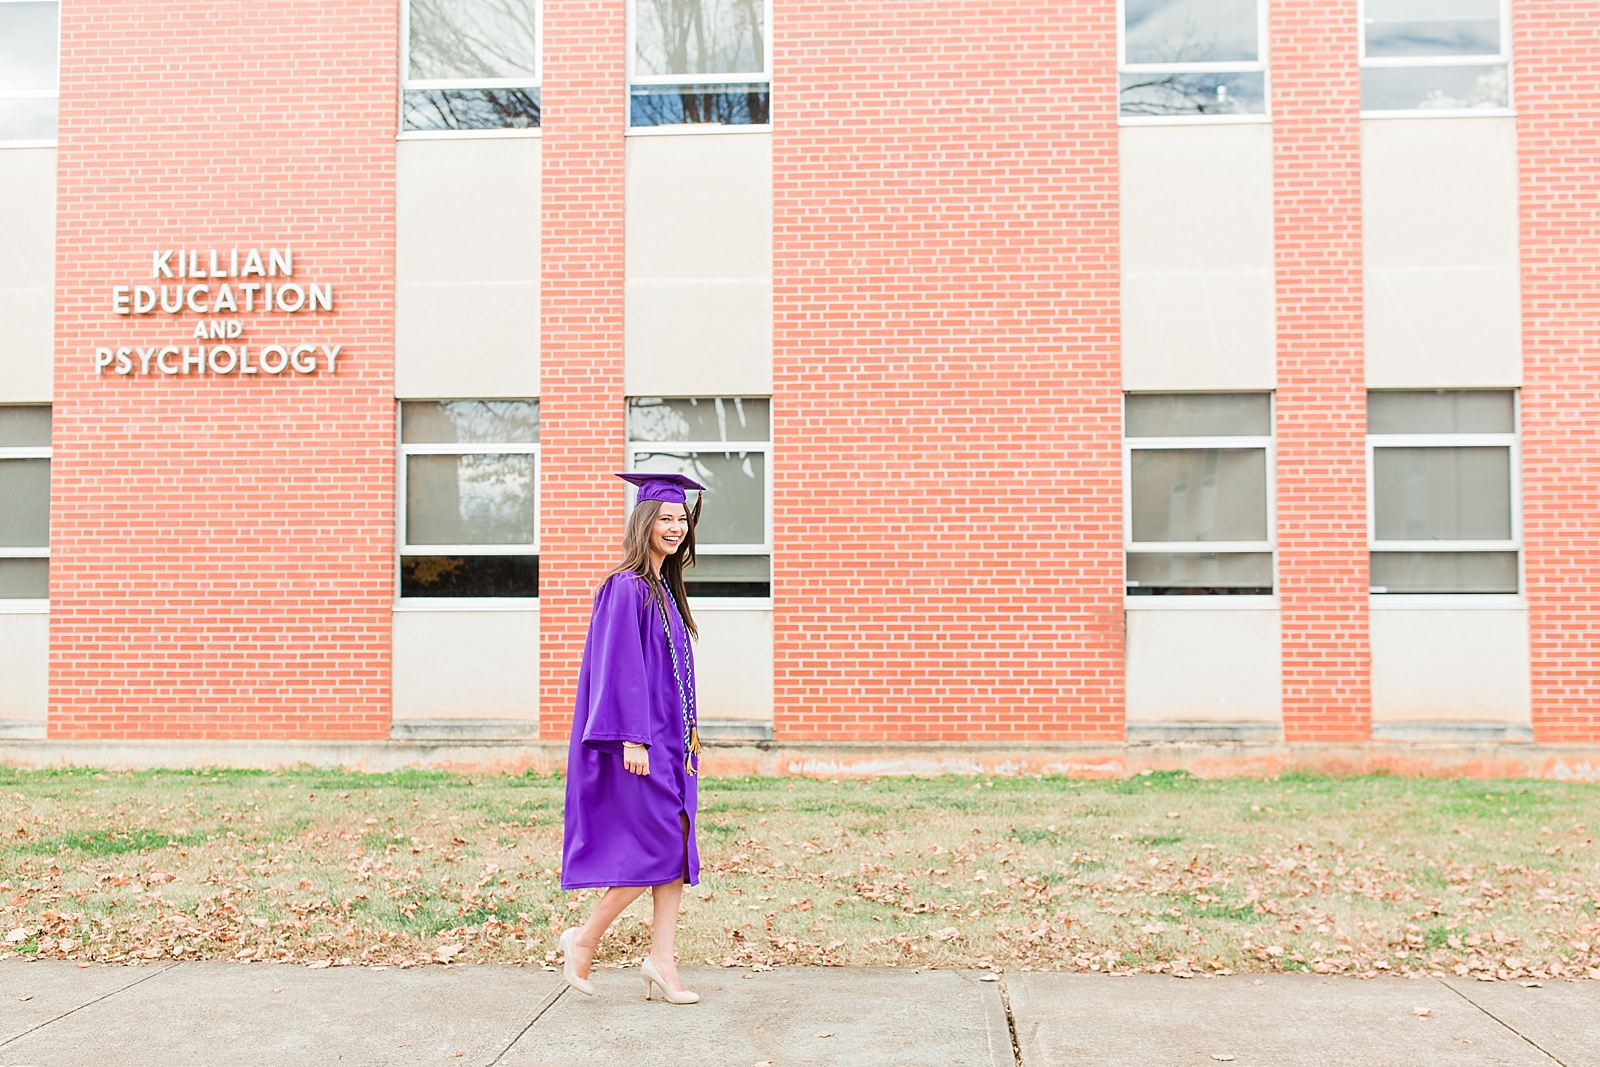 Western Carolina University Senior Sierra walking in front of the Killian education and psychology building Photo